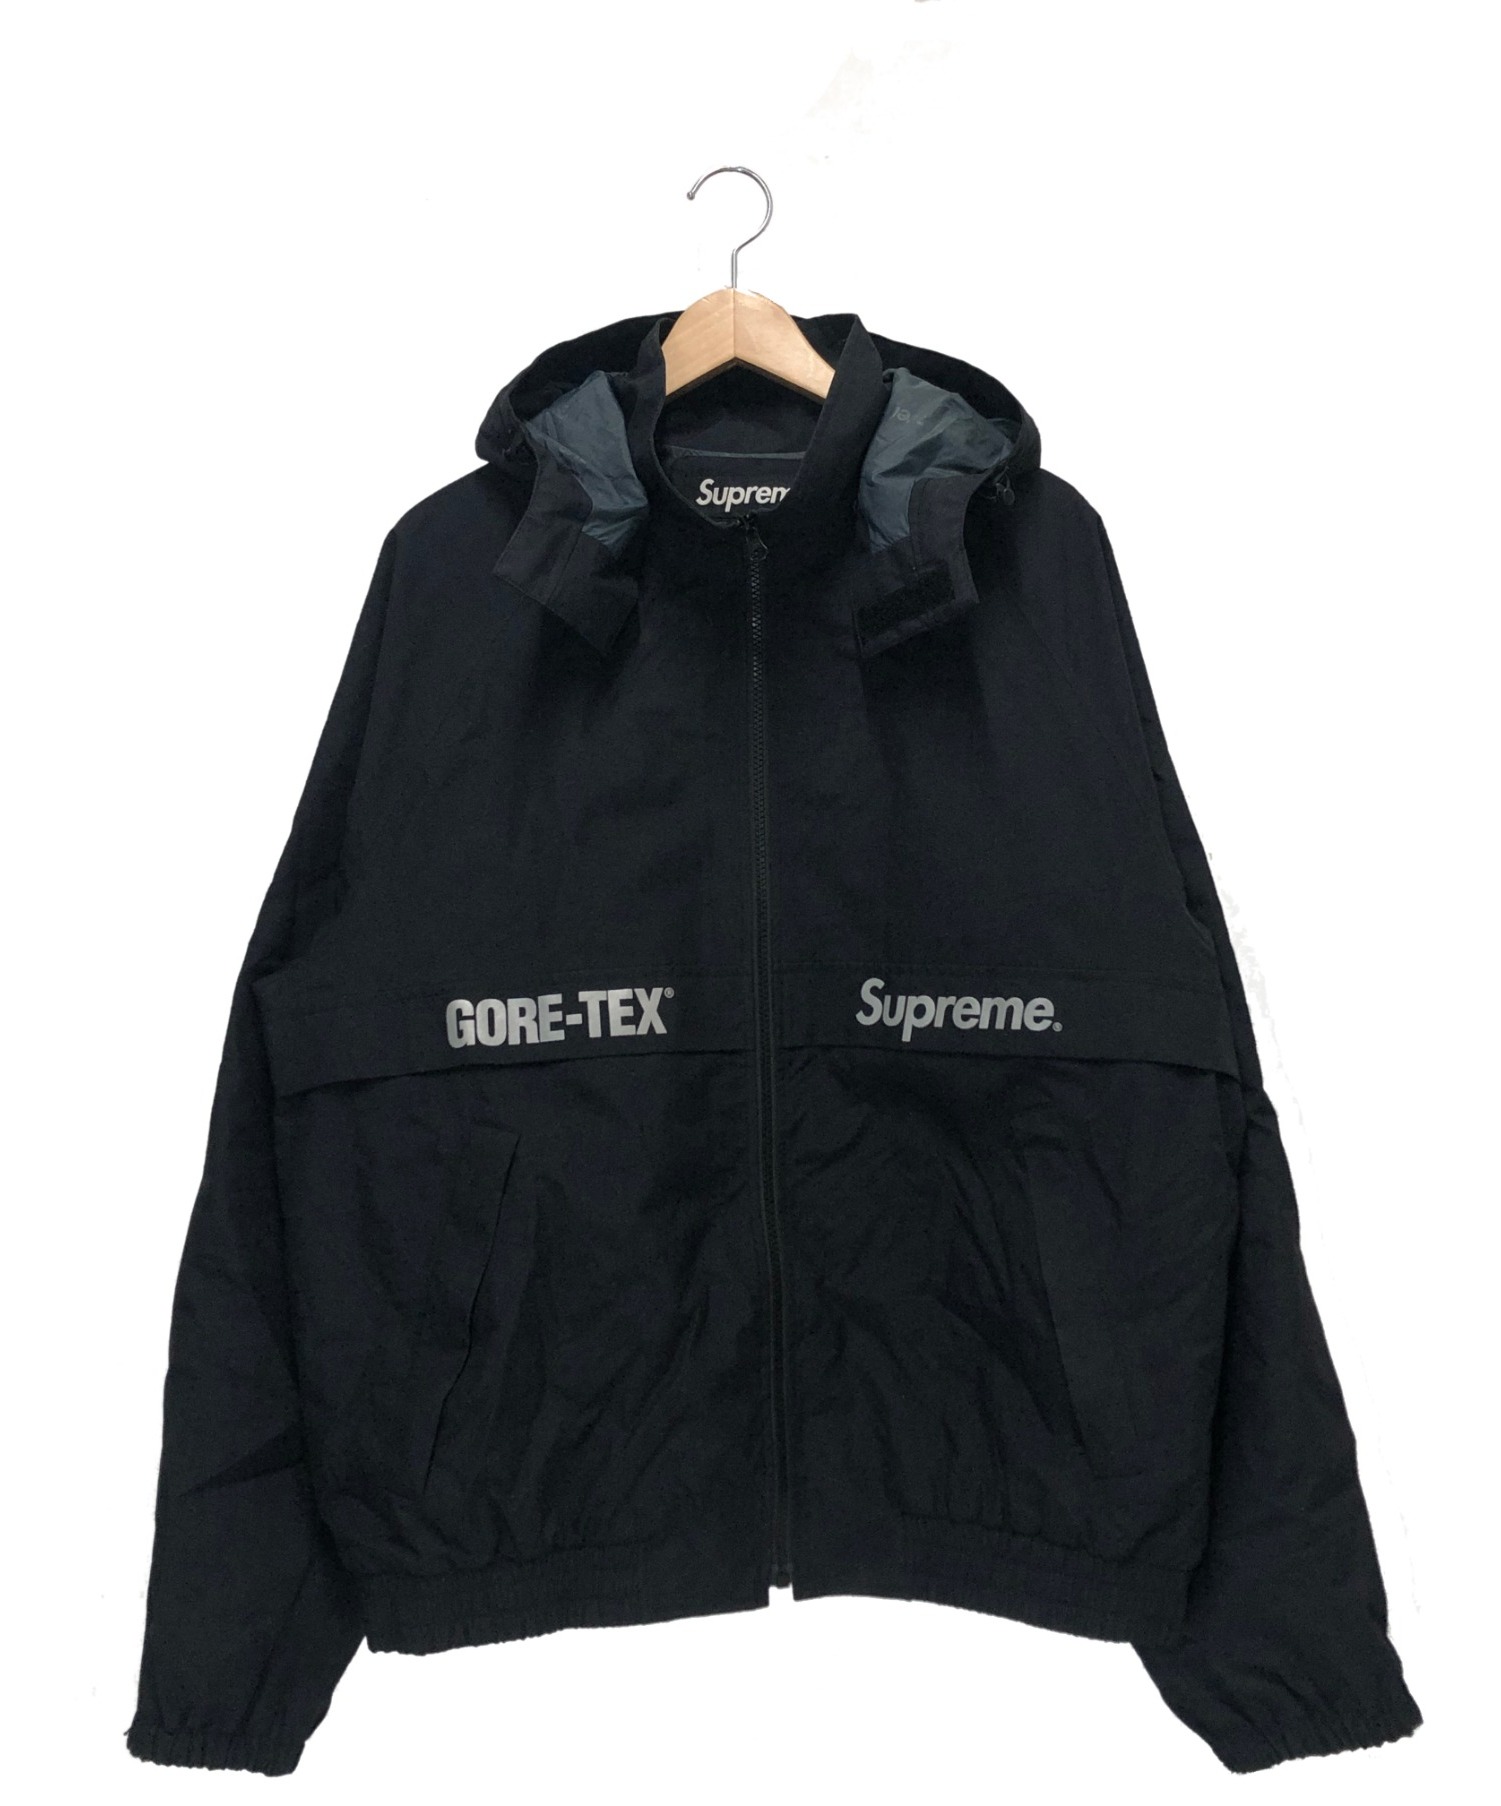 XLサイズ] Supreme GORE-TEX Court Jacket | myglobaltax.com